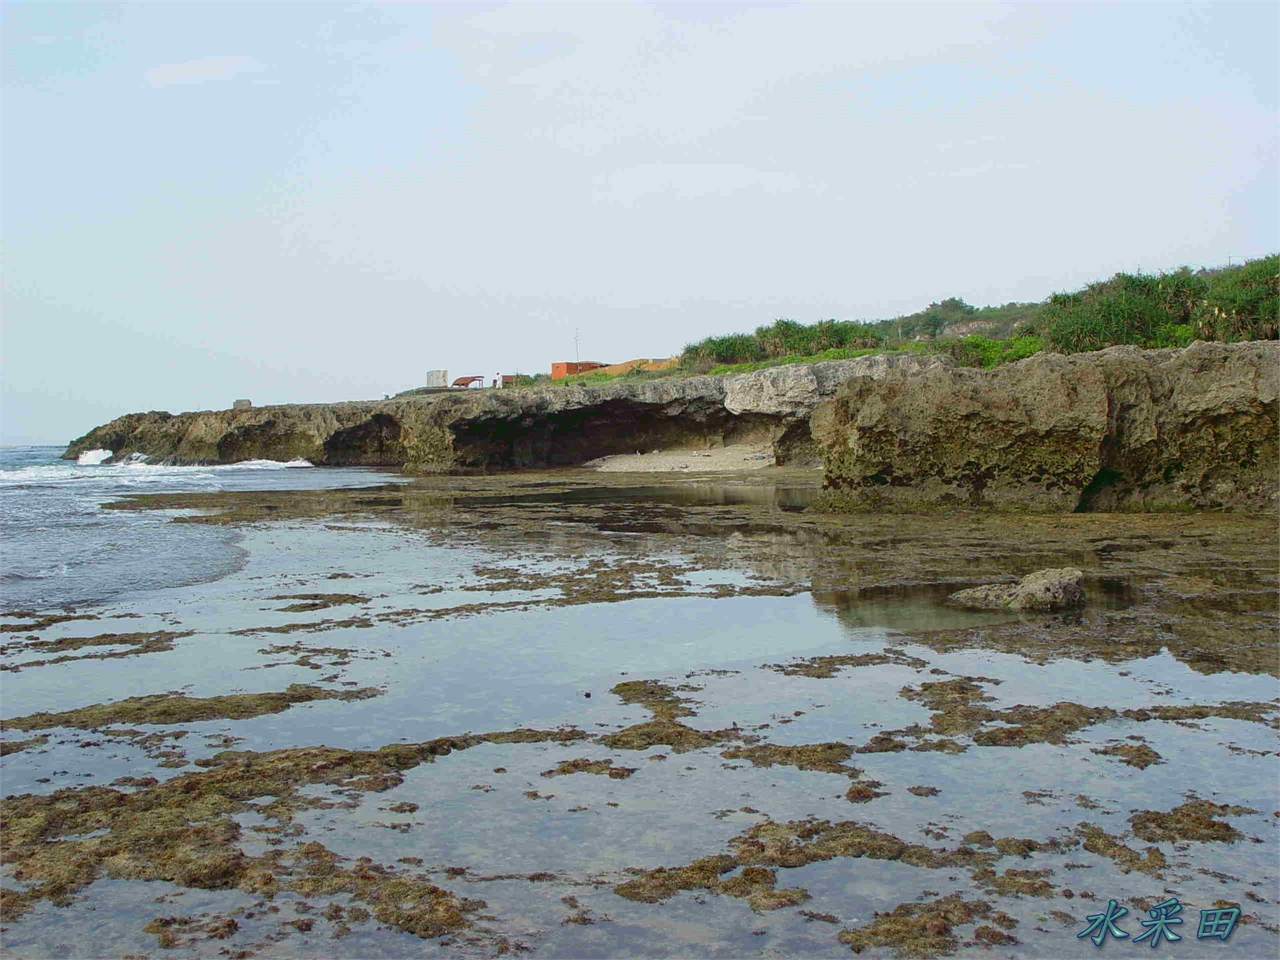 Duzaiping Intertidal Zone